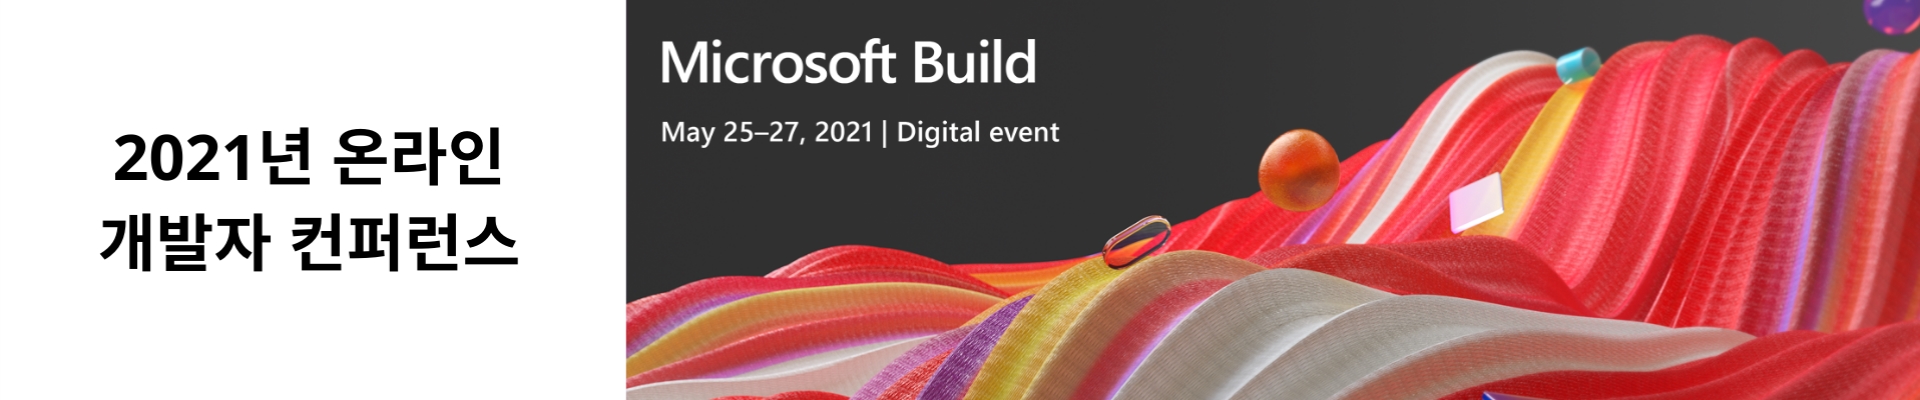 2021 Microsoft Build | 온라인 개발자 컨퍼런스 